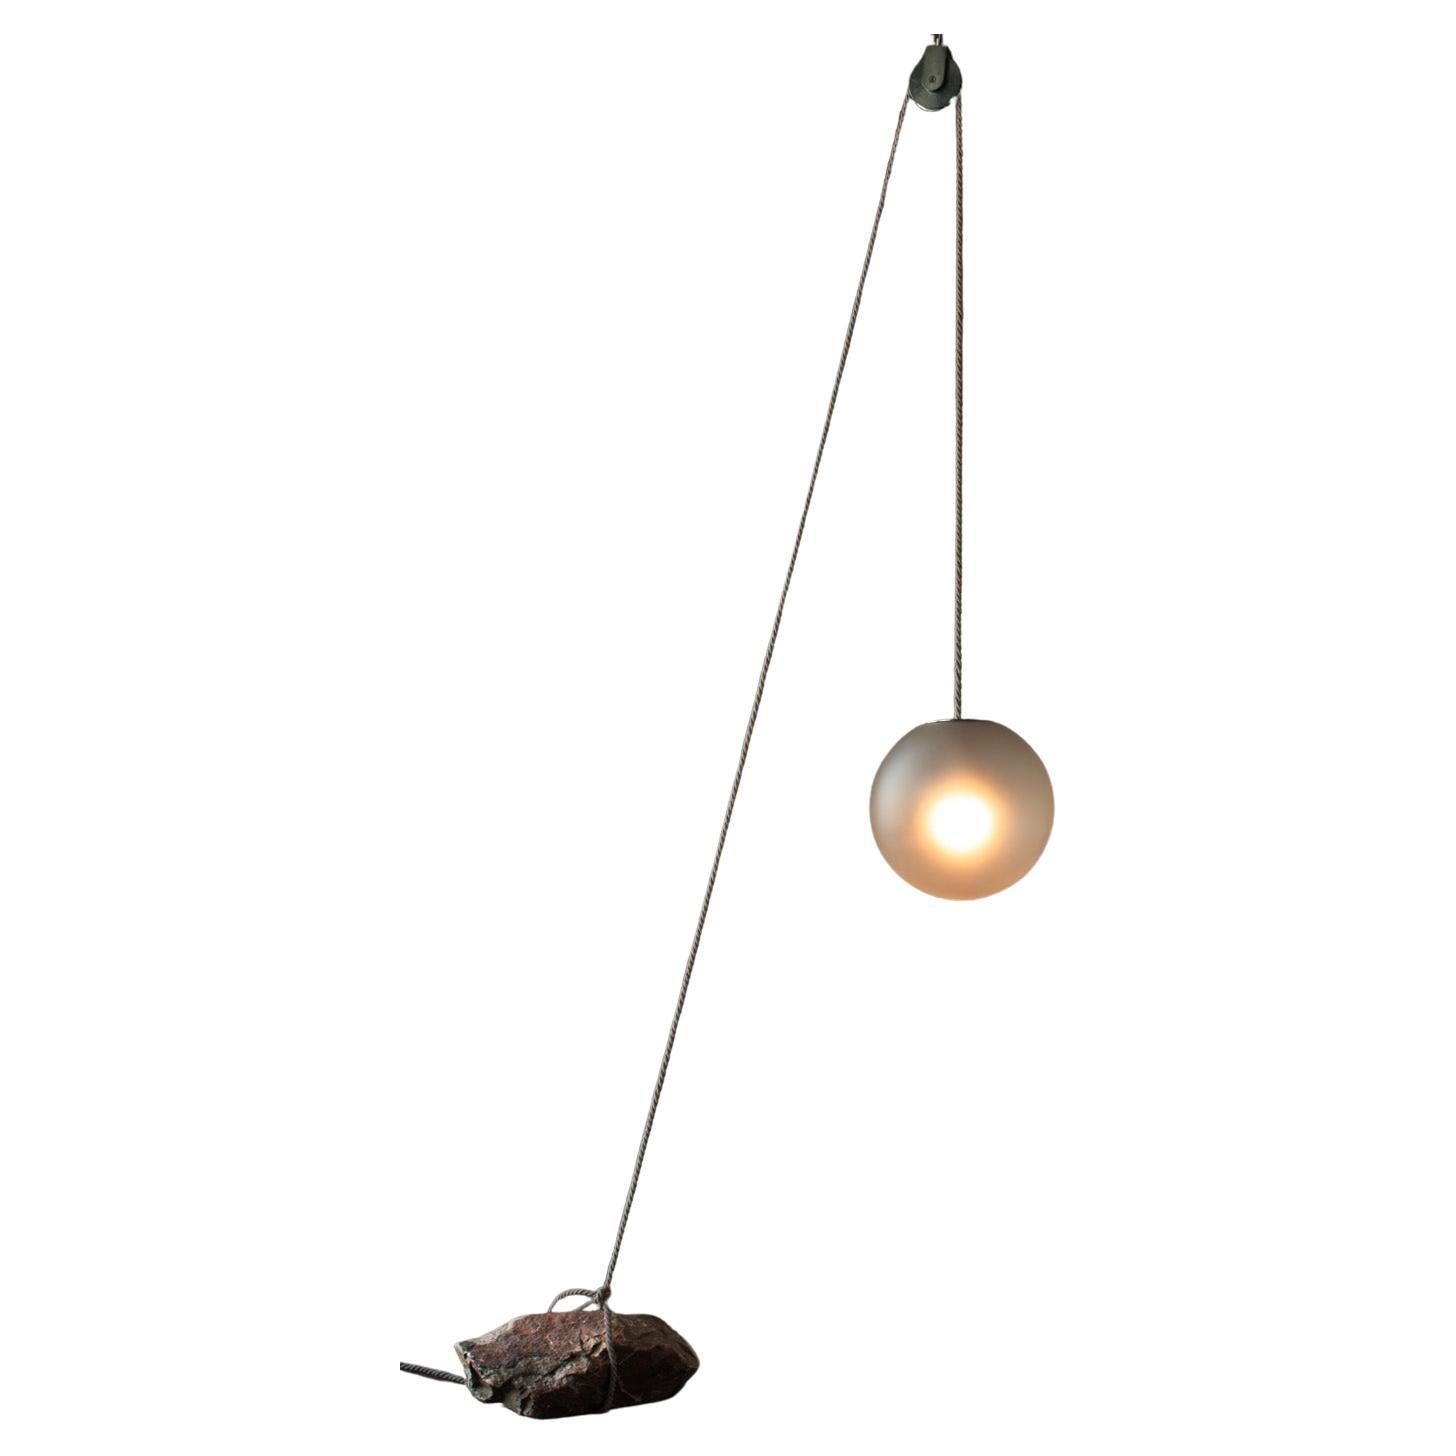 Beacon of Light D50 Glass Ball Sculptural Natural Stone Pendant Floor Lamp